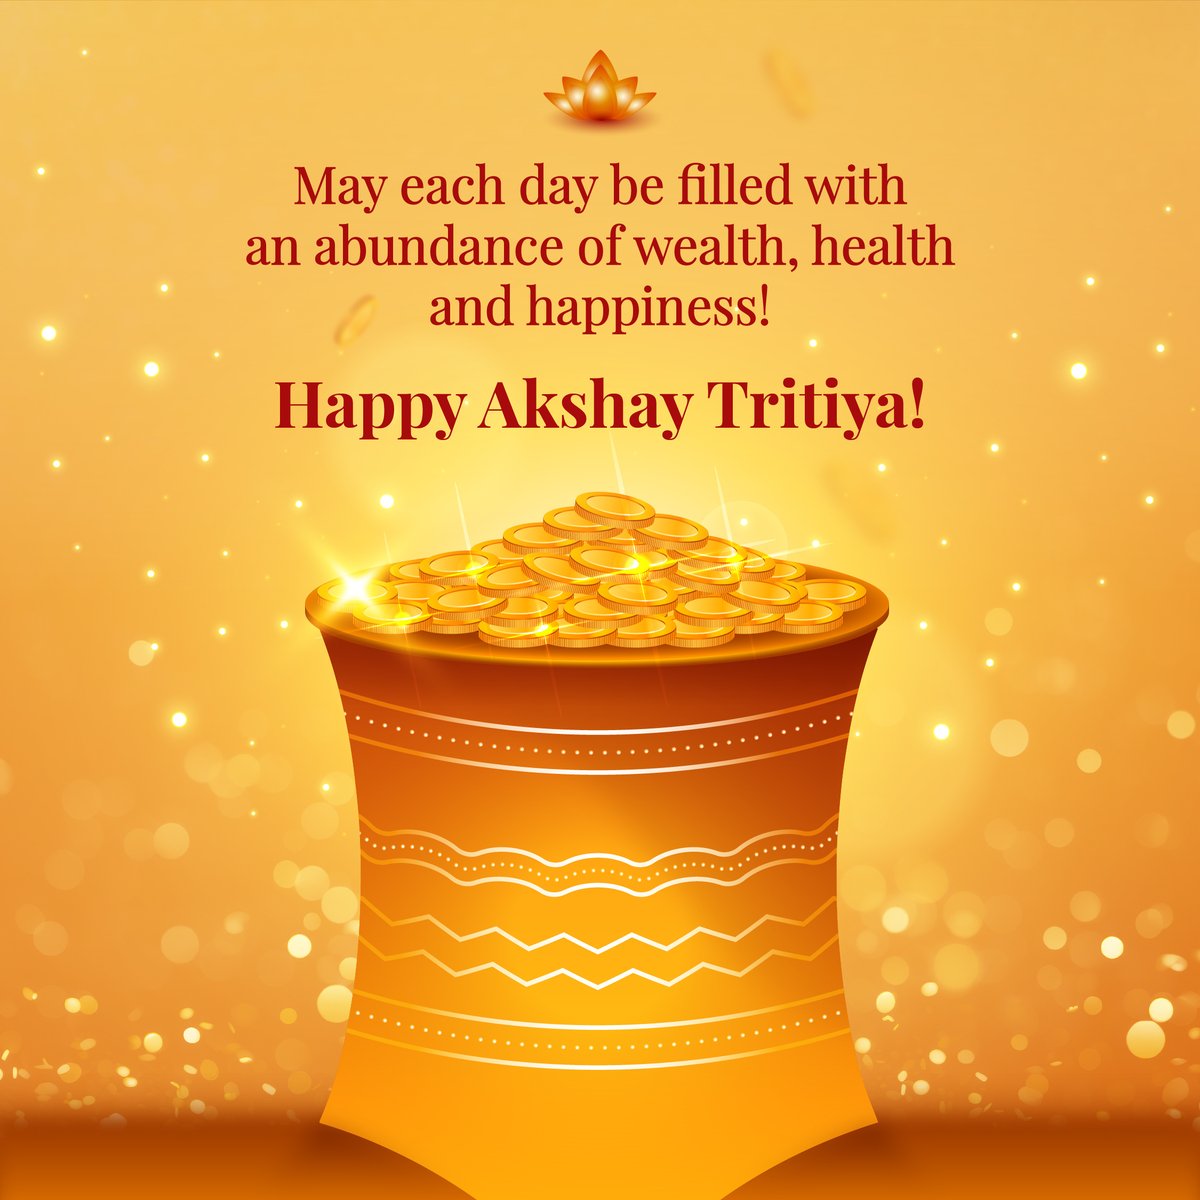 Of sparkling celebrations and prosperous days ahead! #AkshayaTritiya #Manyavar